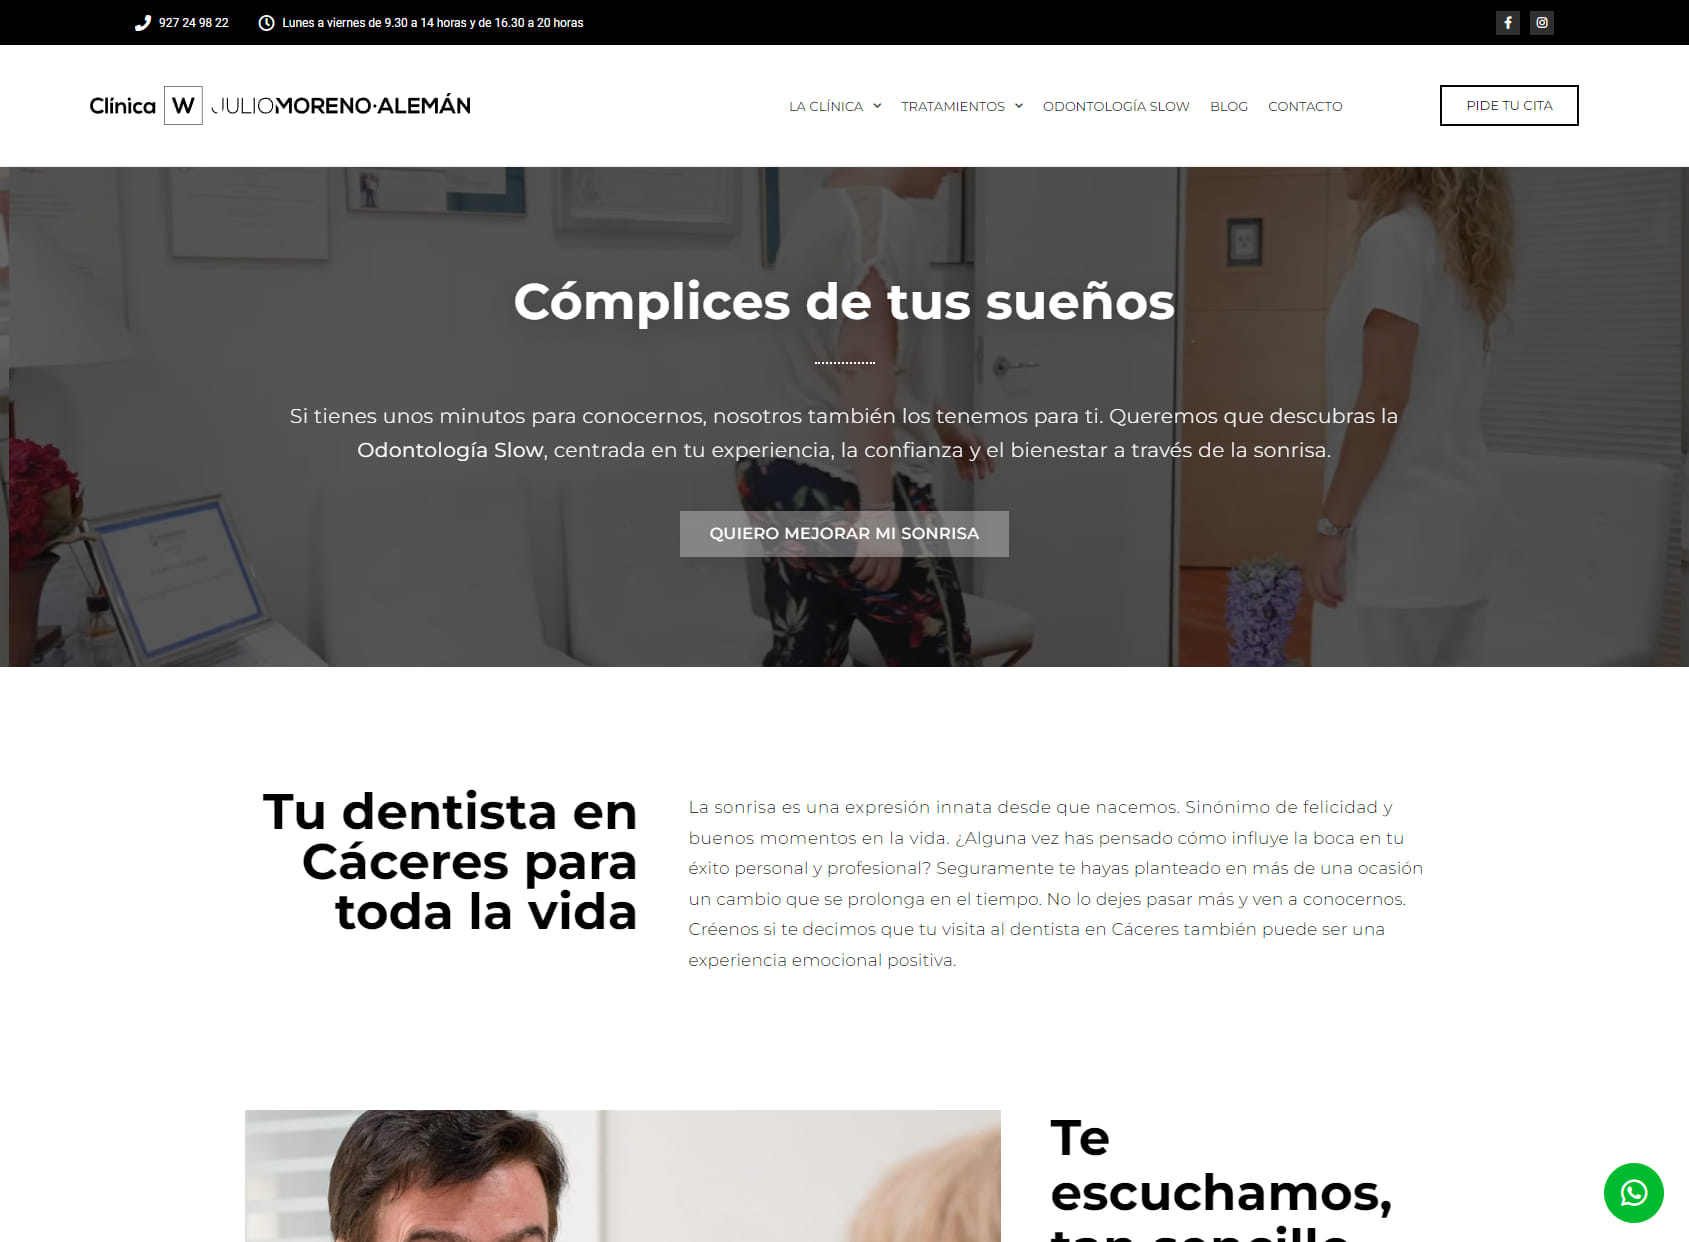 Clínica Dental Julio Moreno Alemán